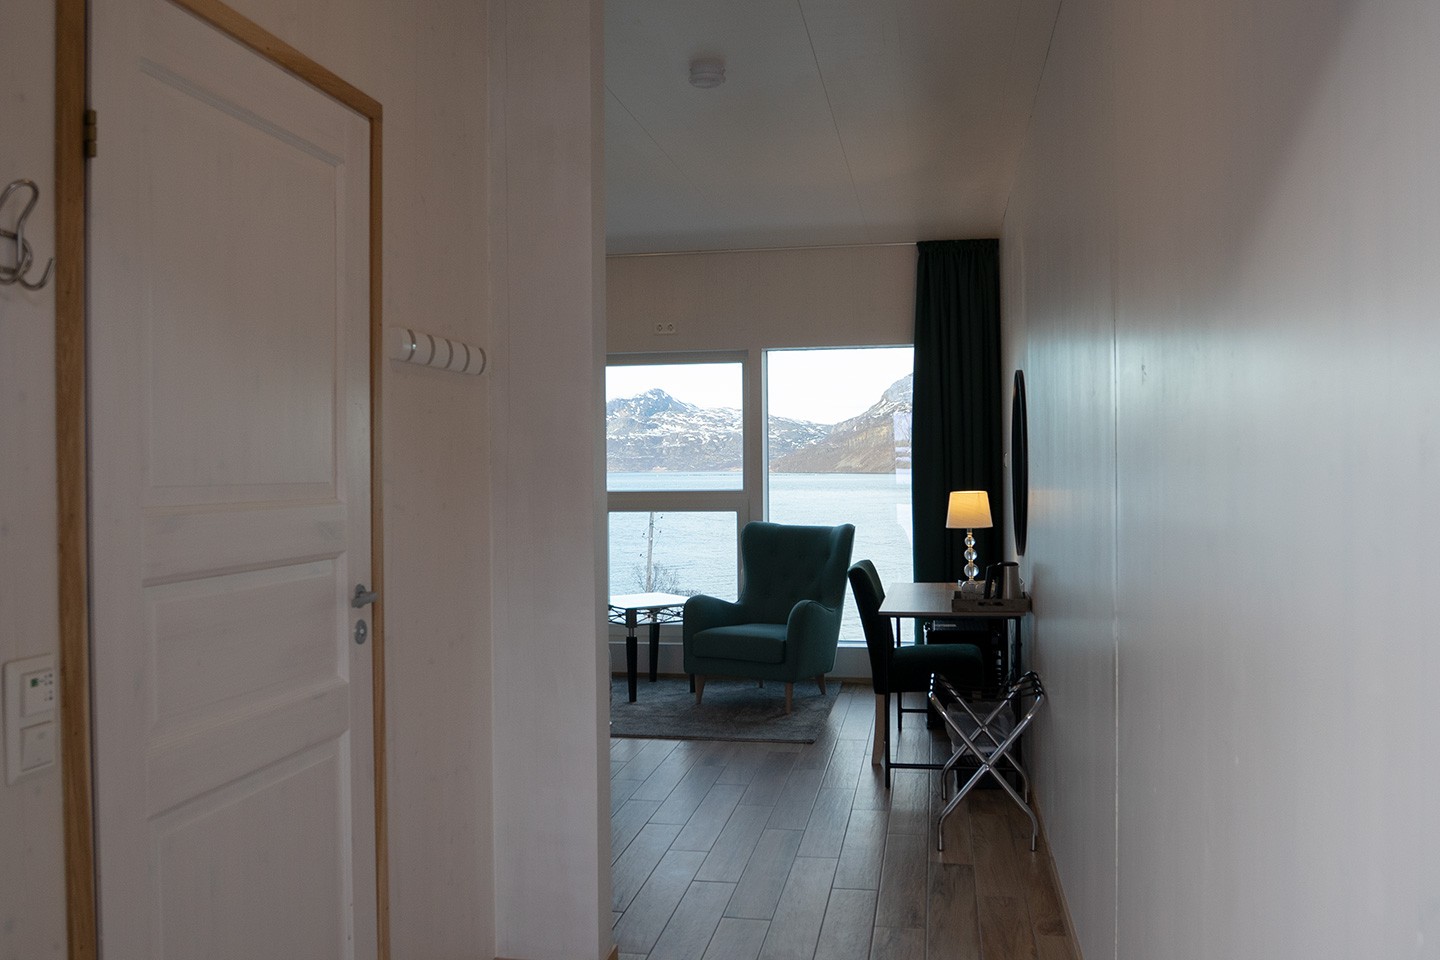 Uløybukt, Arctic Panorama Lodge